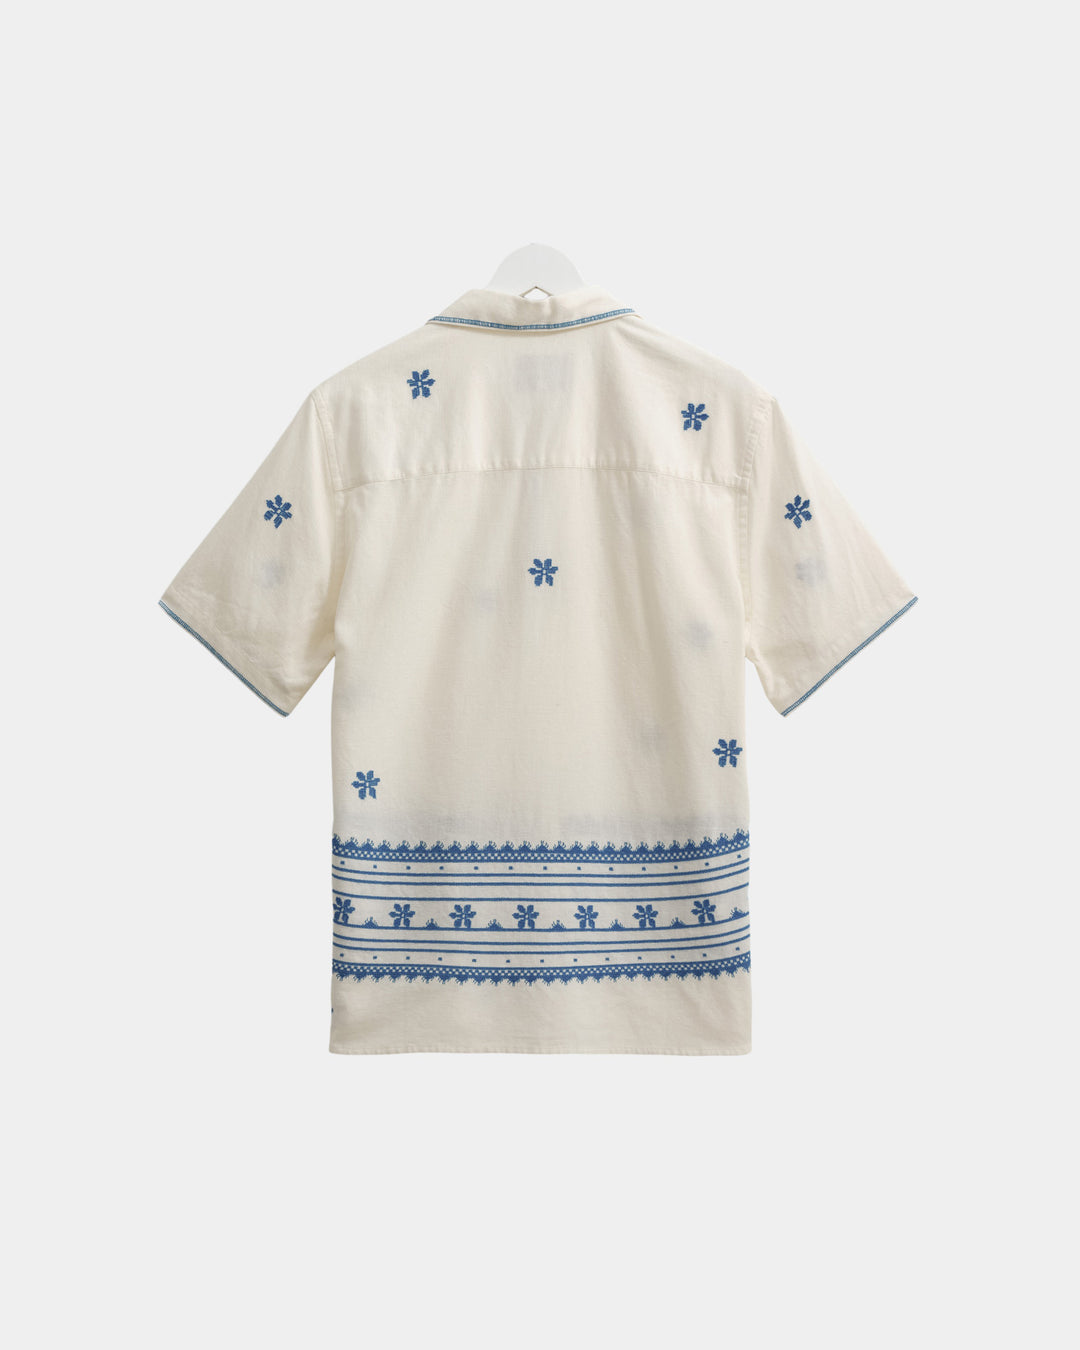 Wax London Didcot Daisy Embroidery Shirt - Ecru/Blue